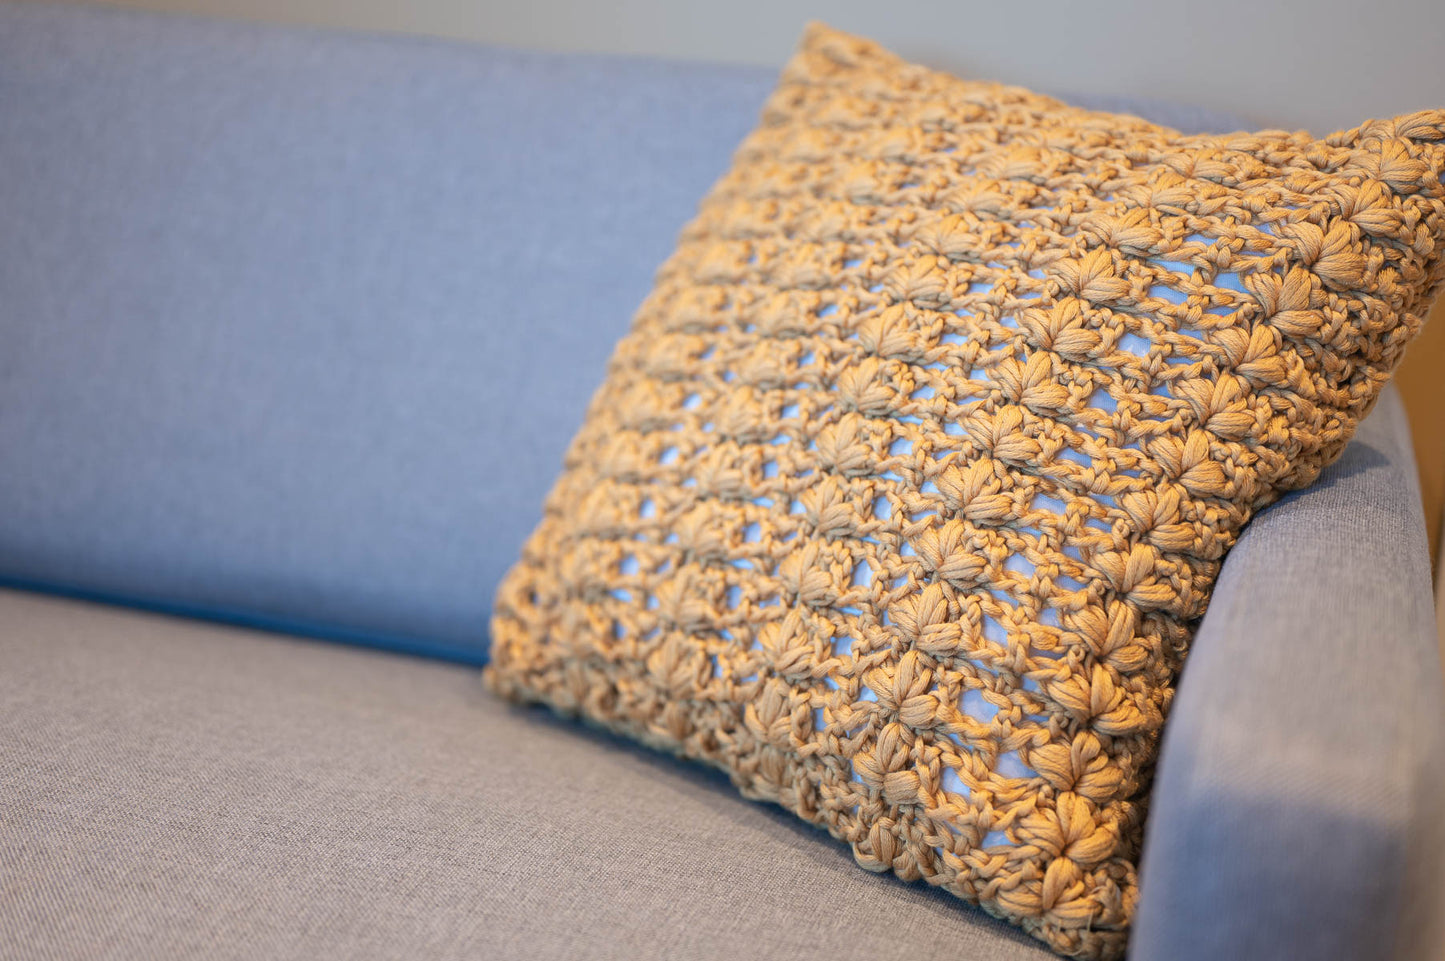 Flower Pillow Cover Crochet Pattern